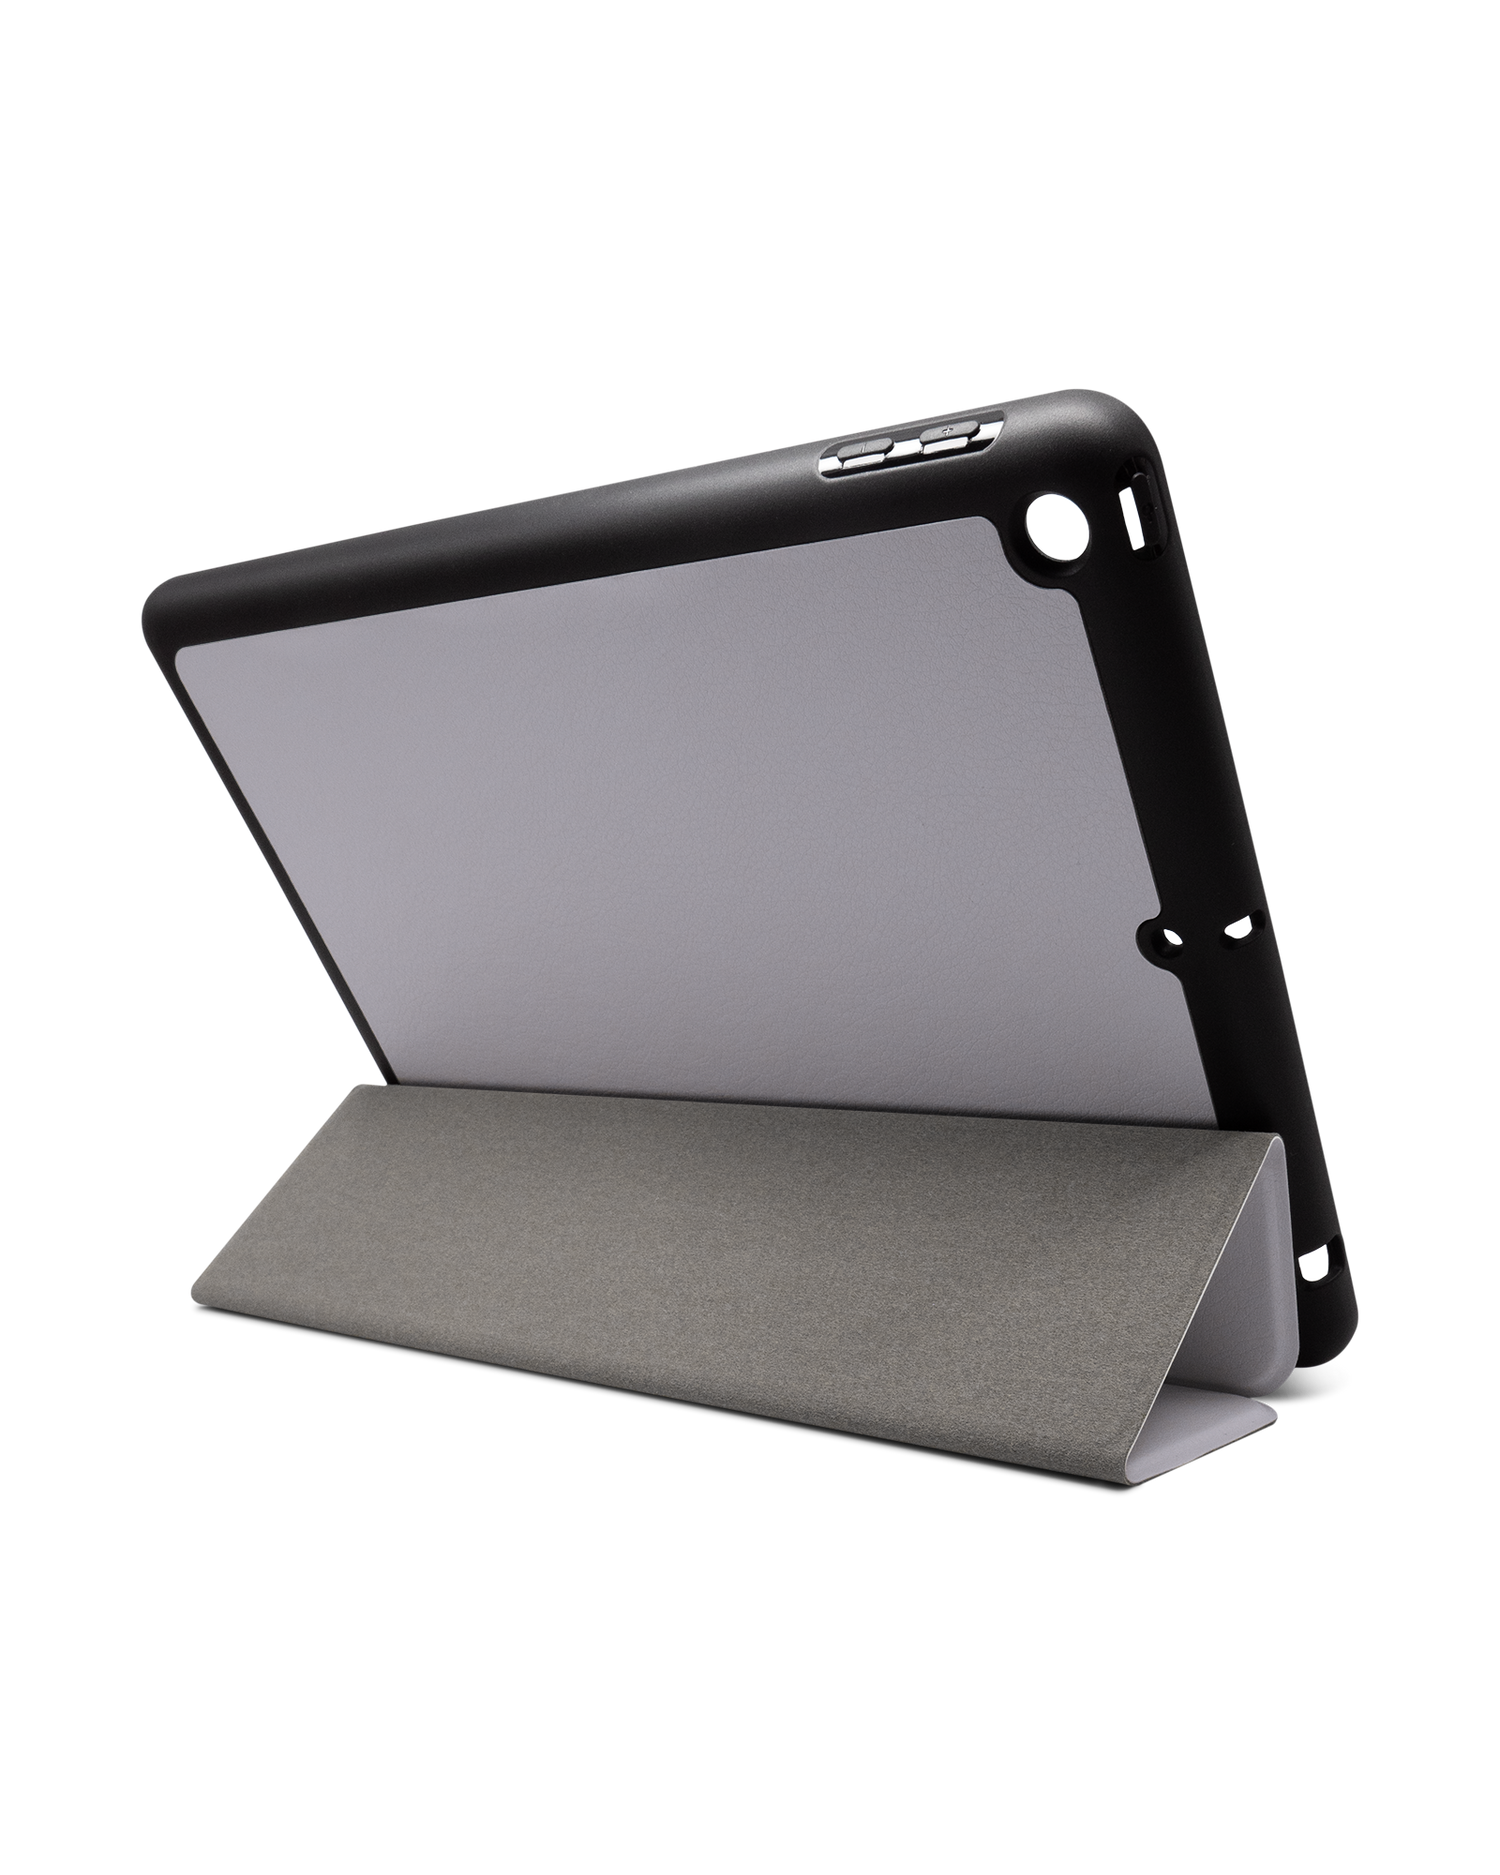 LIGHT PURPLE iPad Case with Pencil Holder for Apple iPad 5 9.7